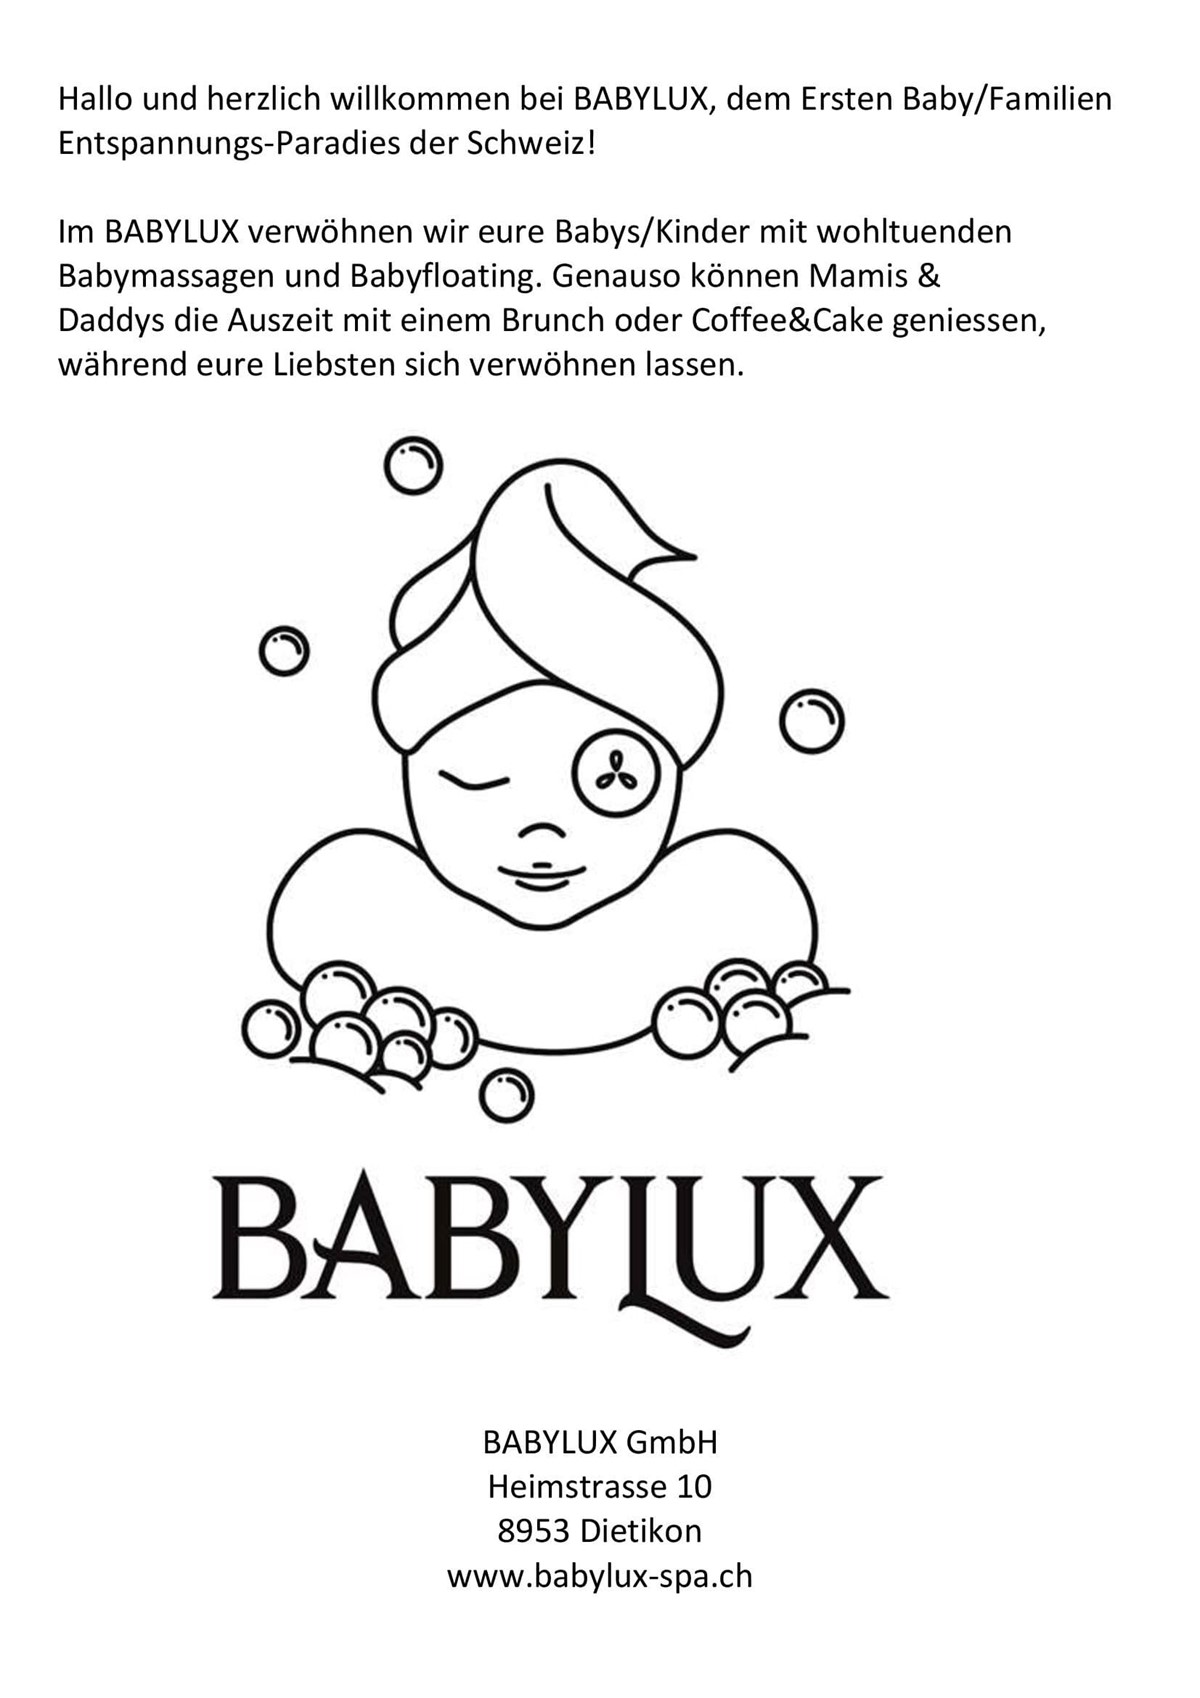 BABYLUX GmbH